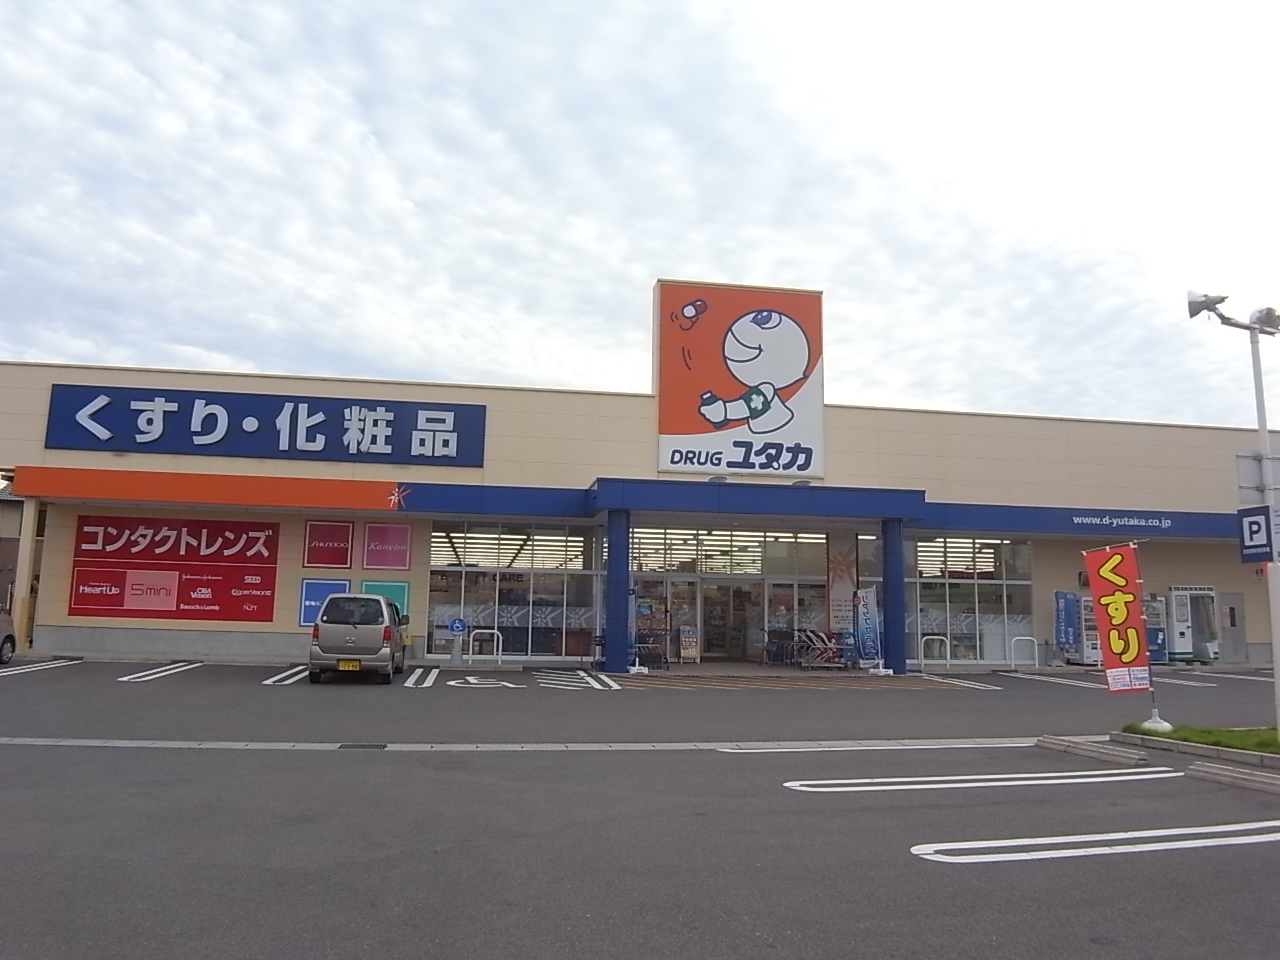 Dorakkusutoa. Drag Yutaka Kido shop 2082m until (drugstore)